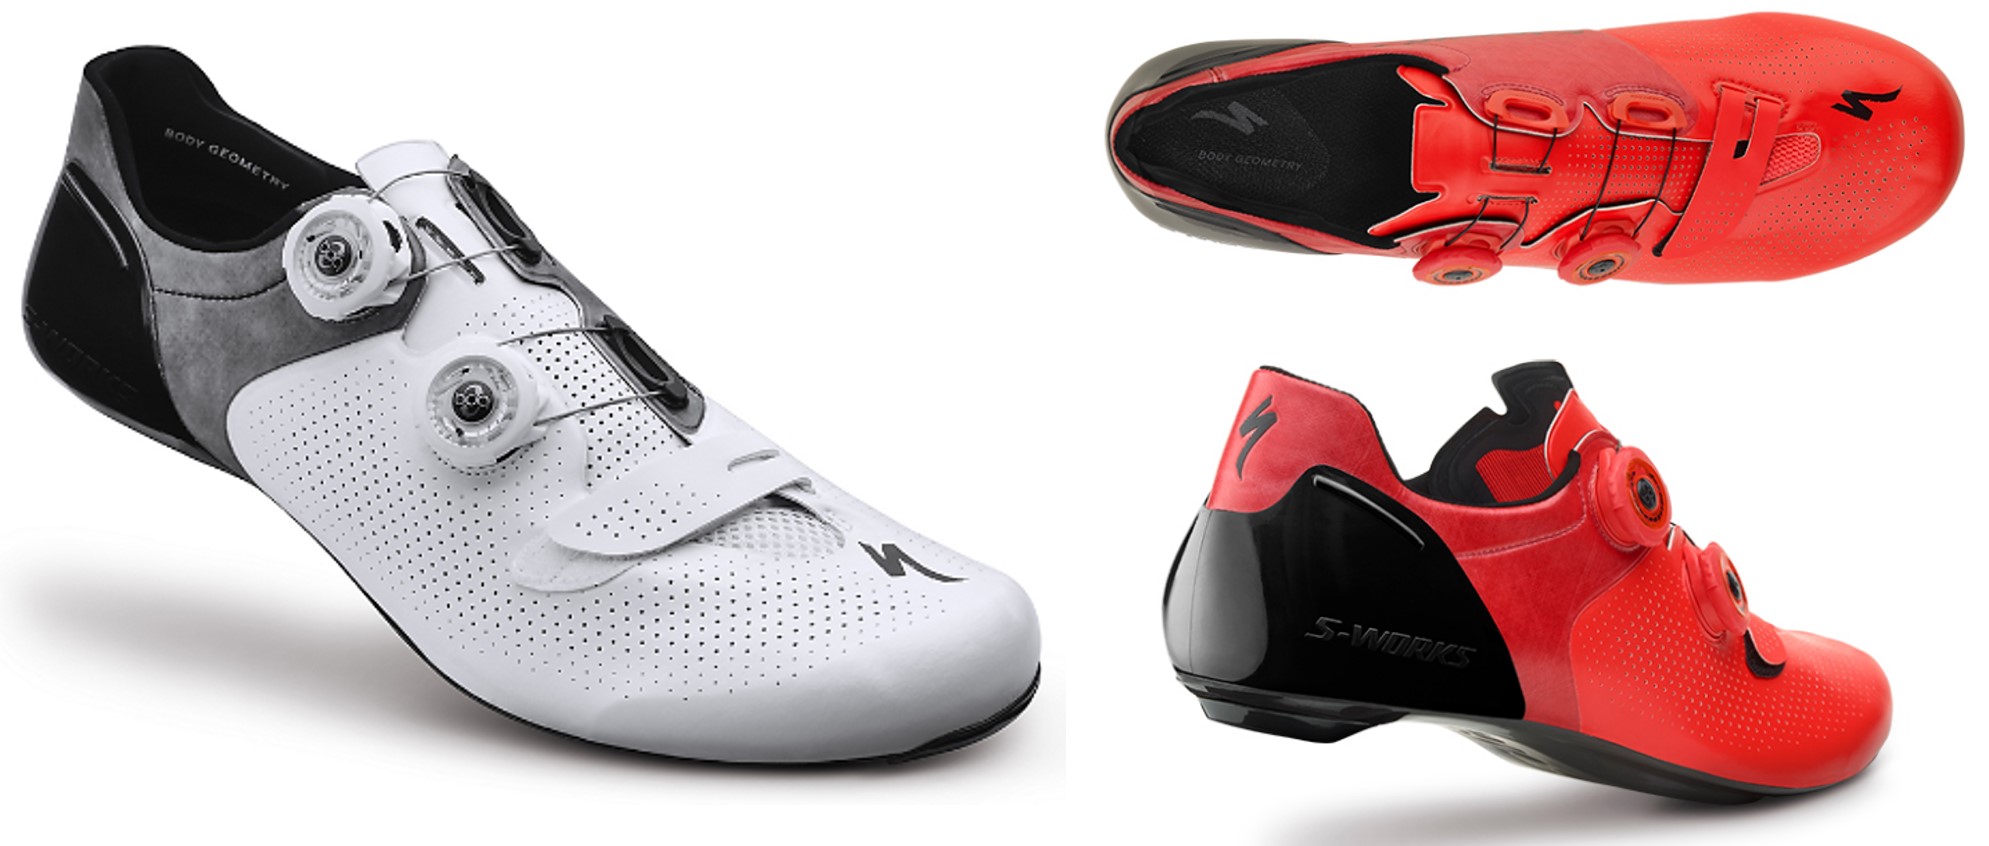 Best Road Bike Gear- Best performance shoes - Shimano S-Works 6